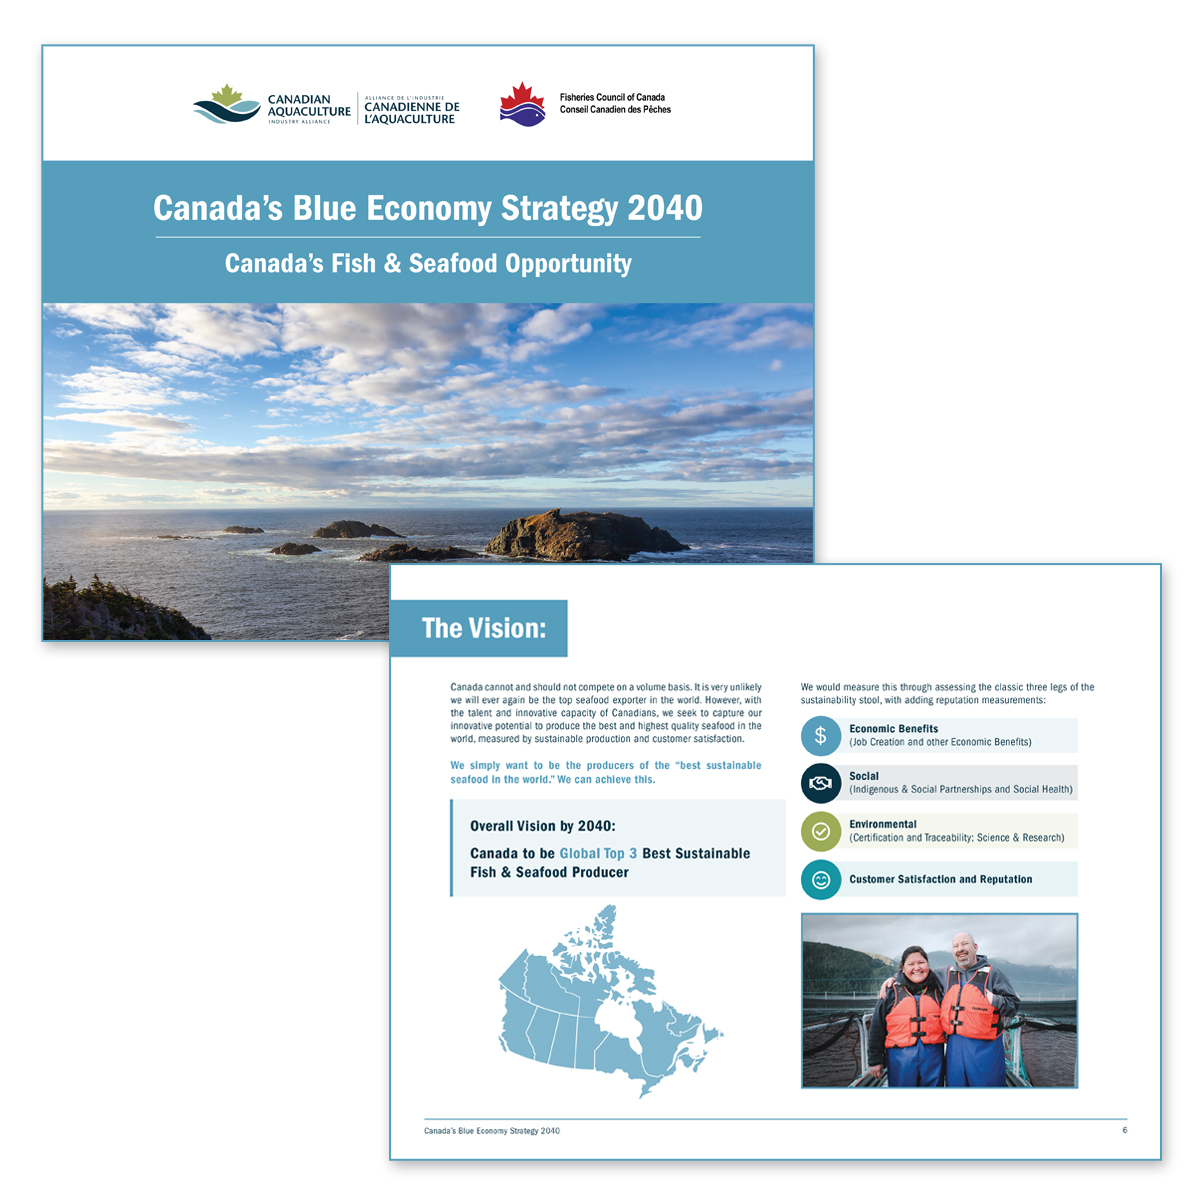 Canada’s Blue Economy Strategy 2040